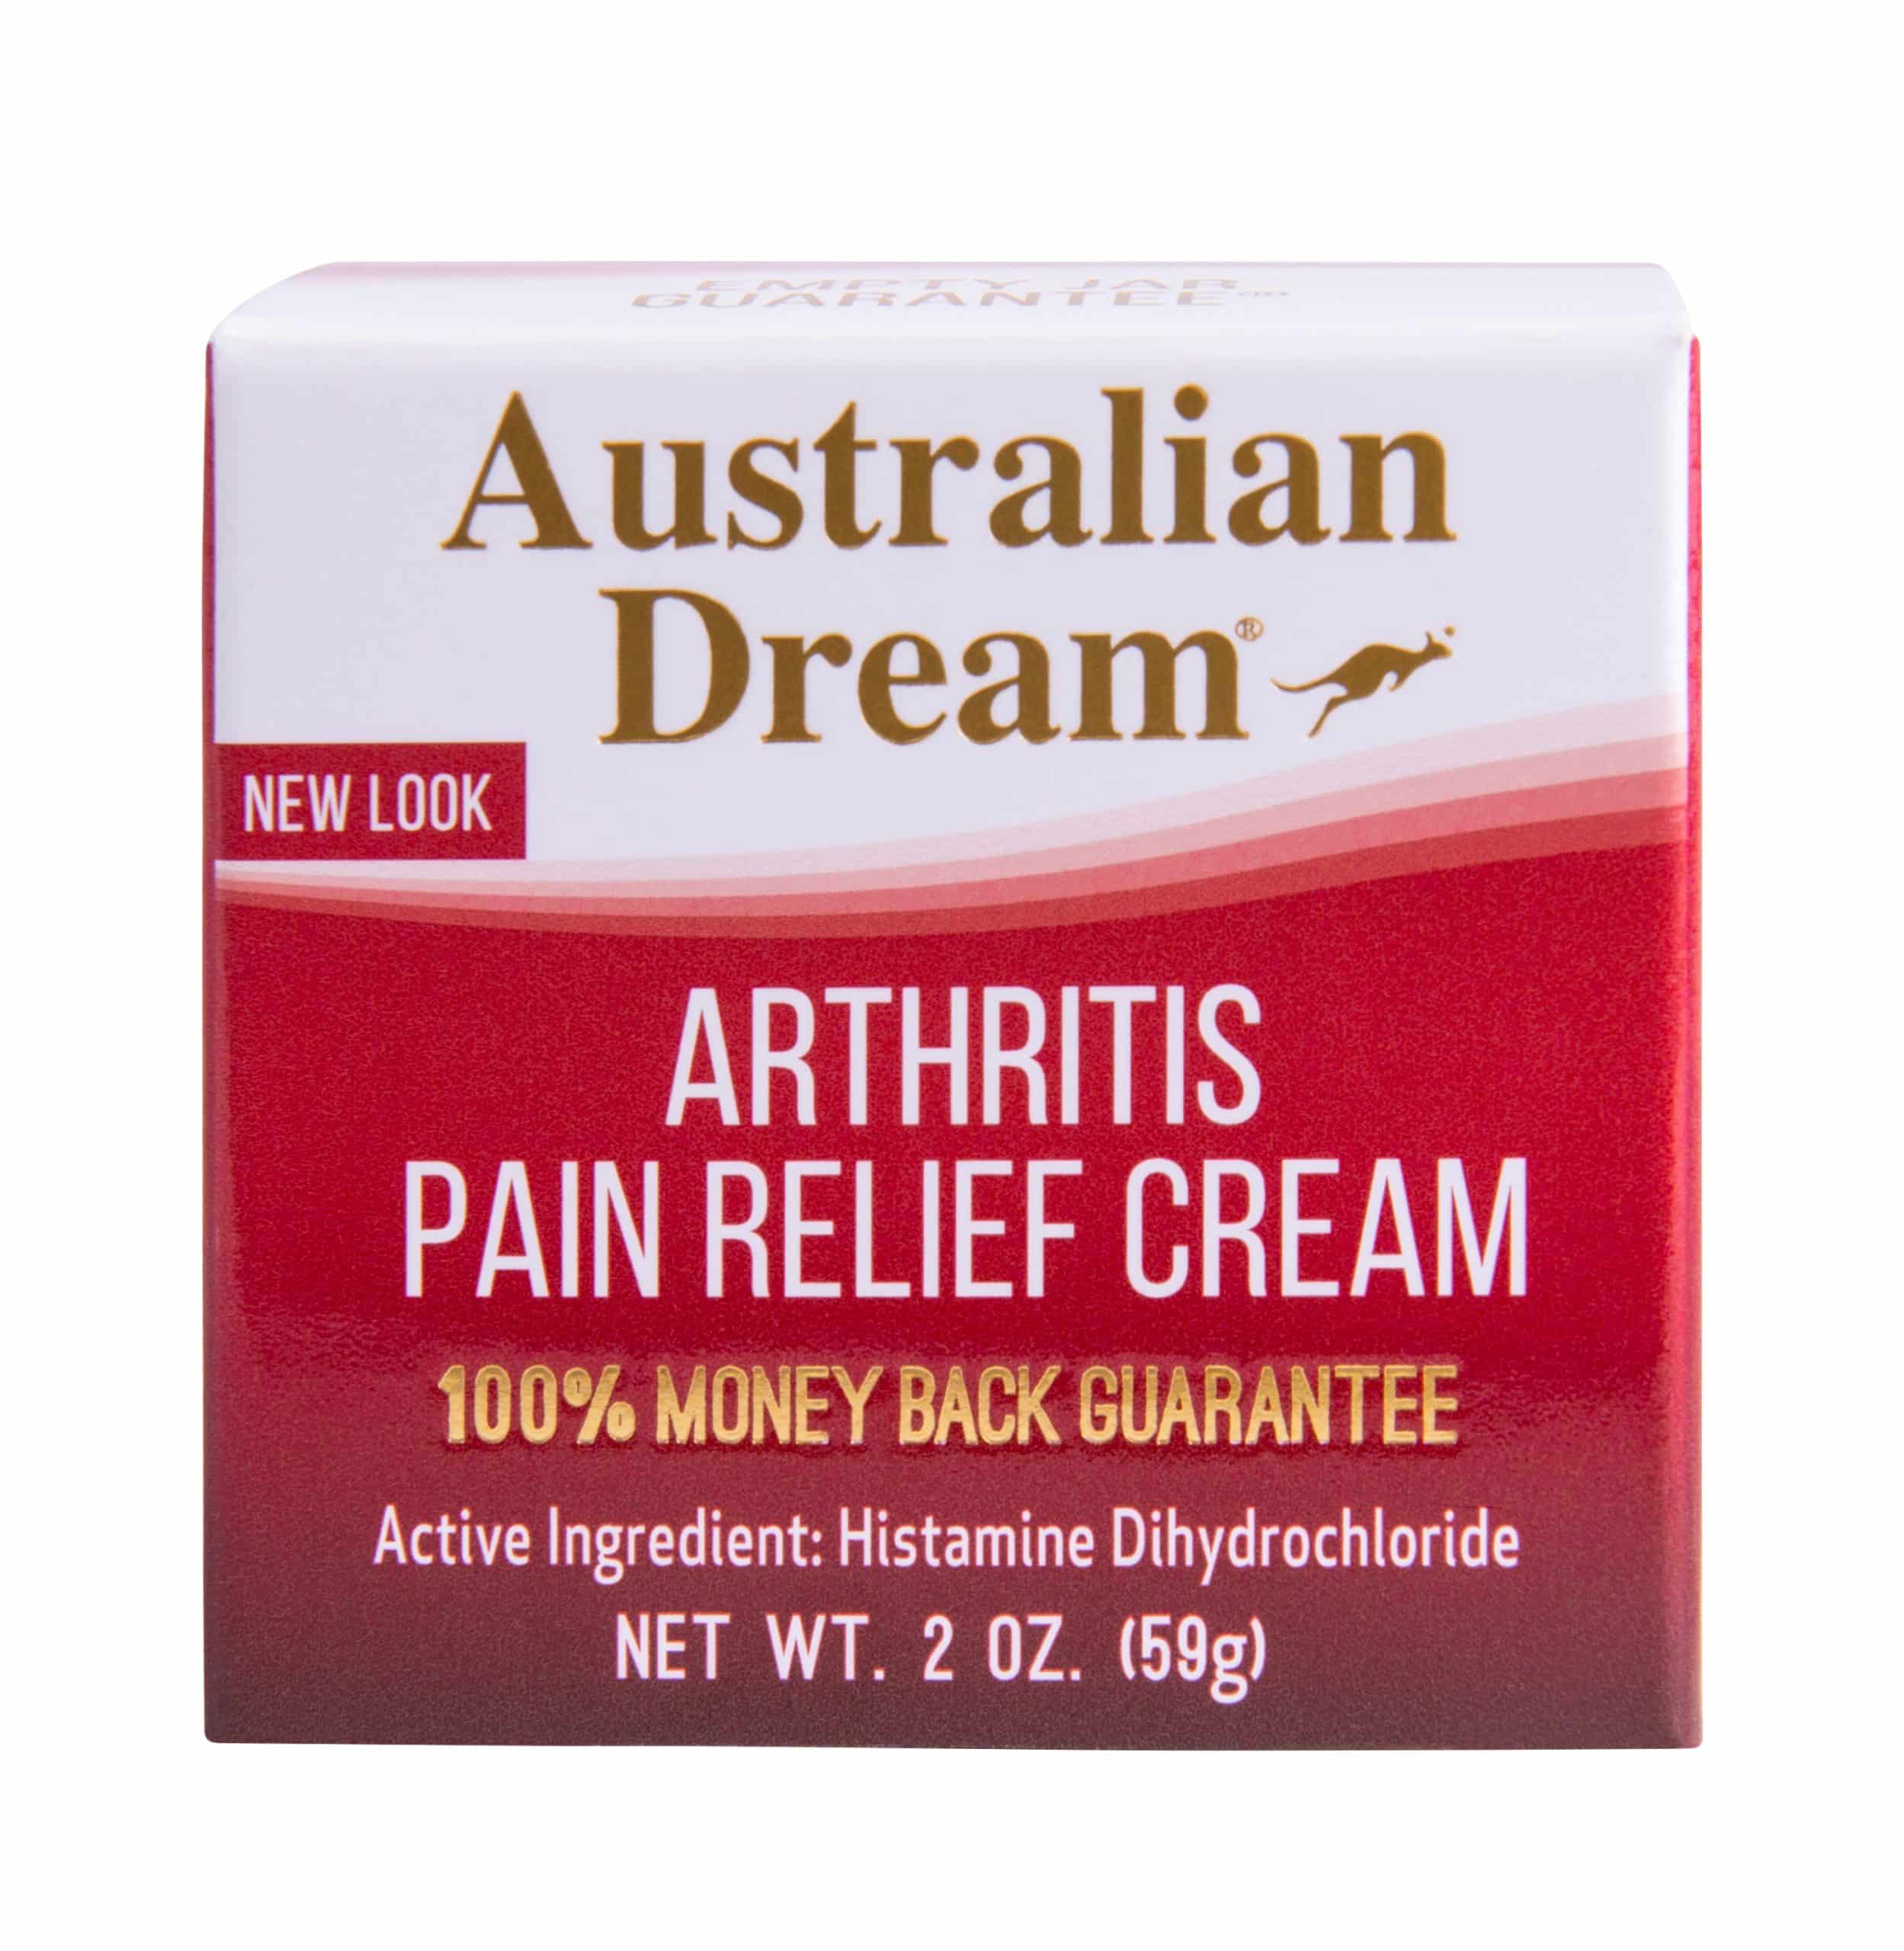 Australian Dream Arthritis Pain Relief Cream, 2 oz. Jar  Over